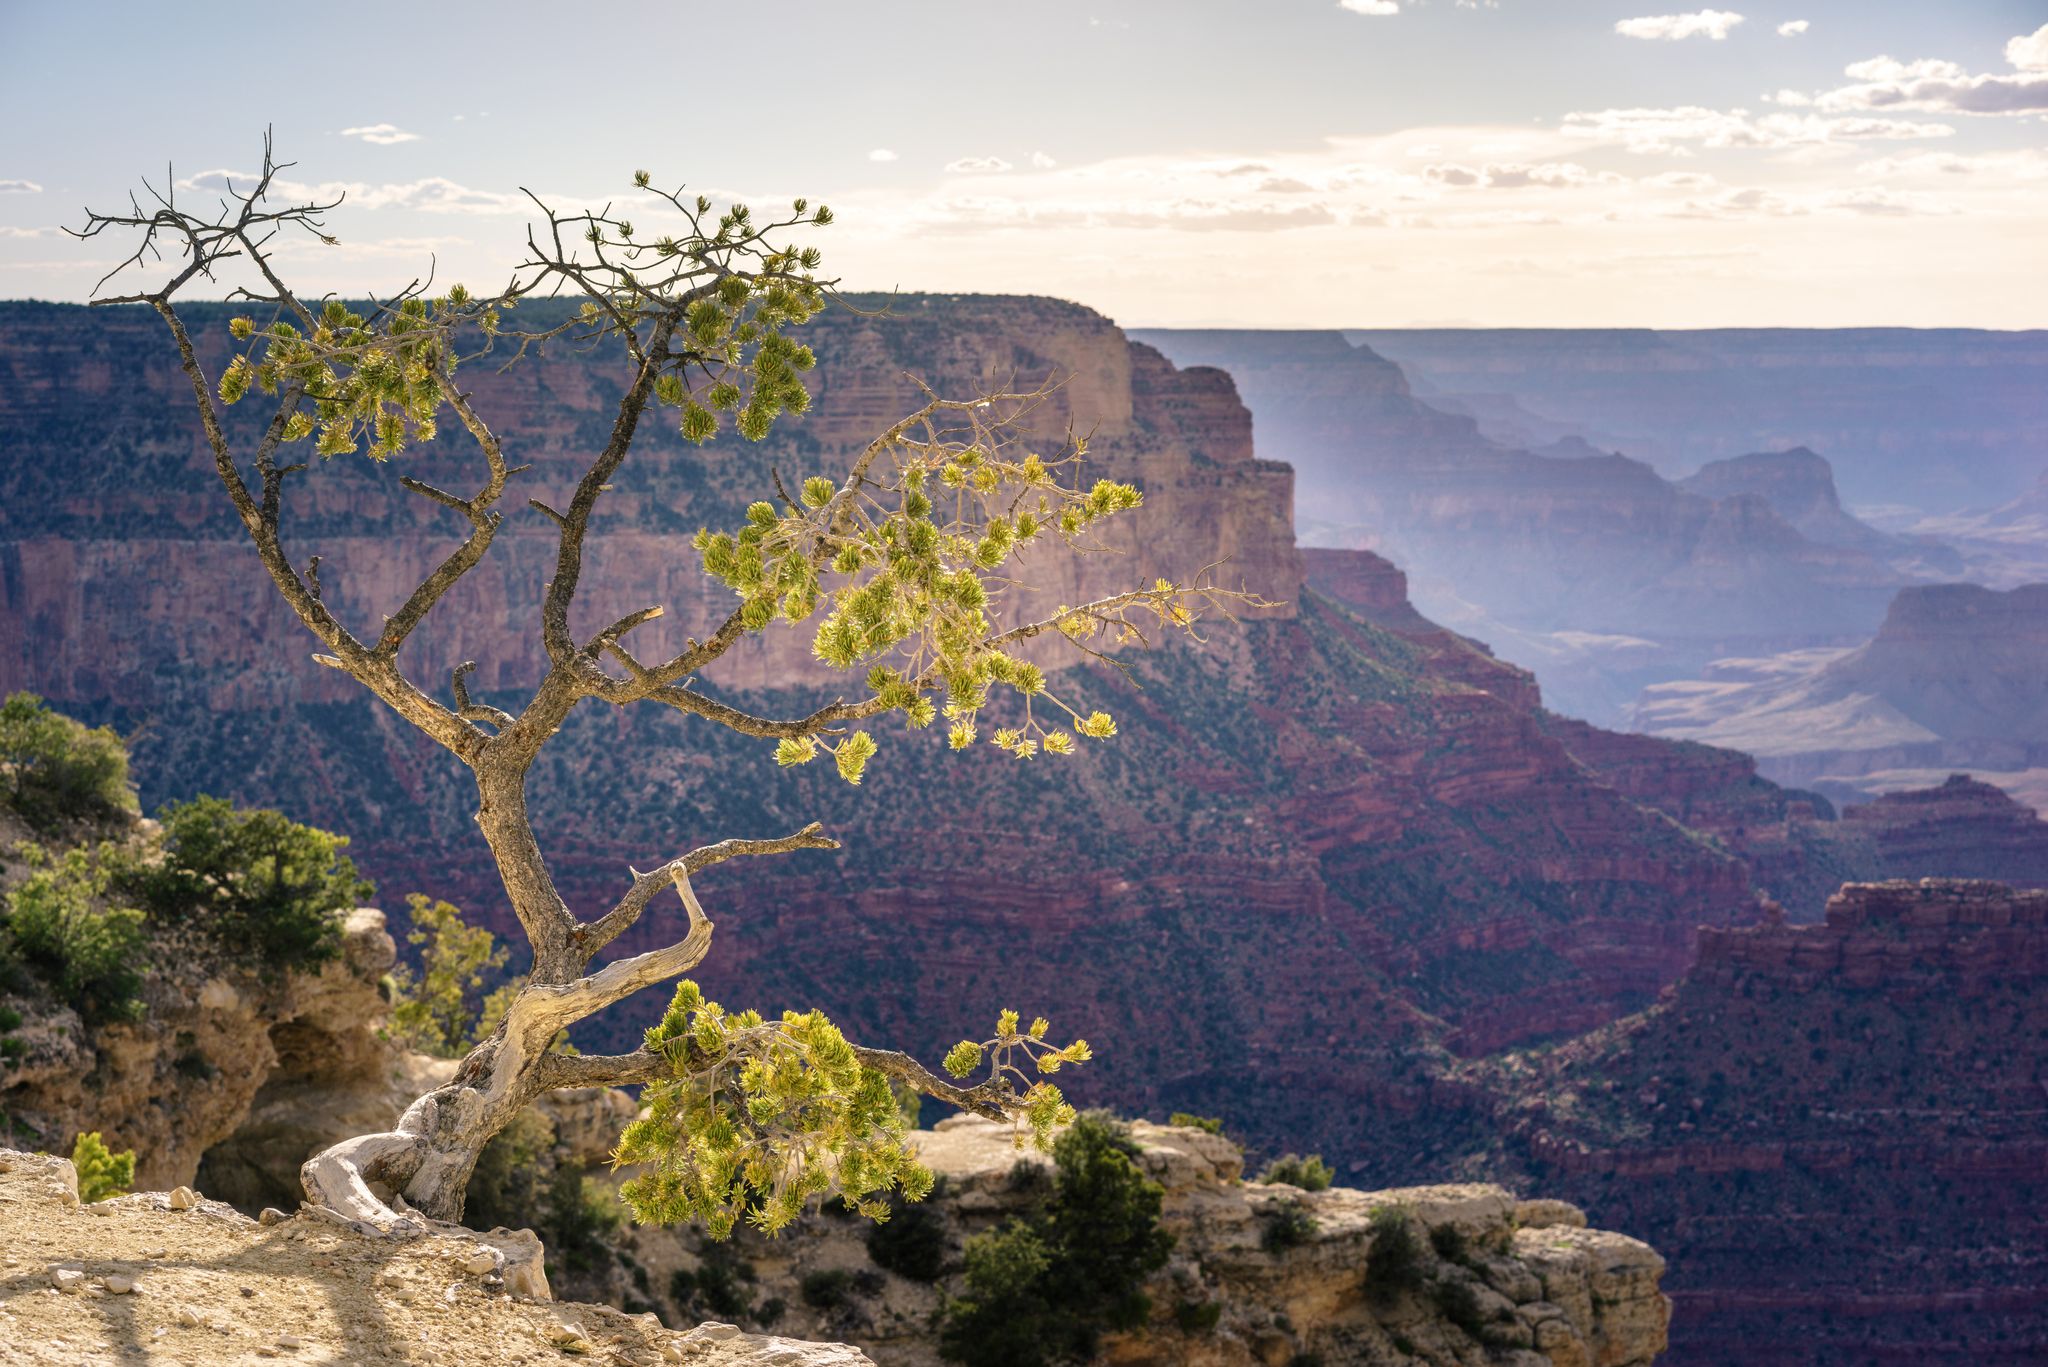 The Grand Canyon in Arizona, US.